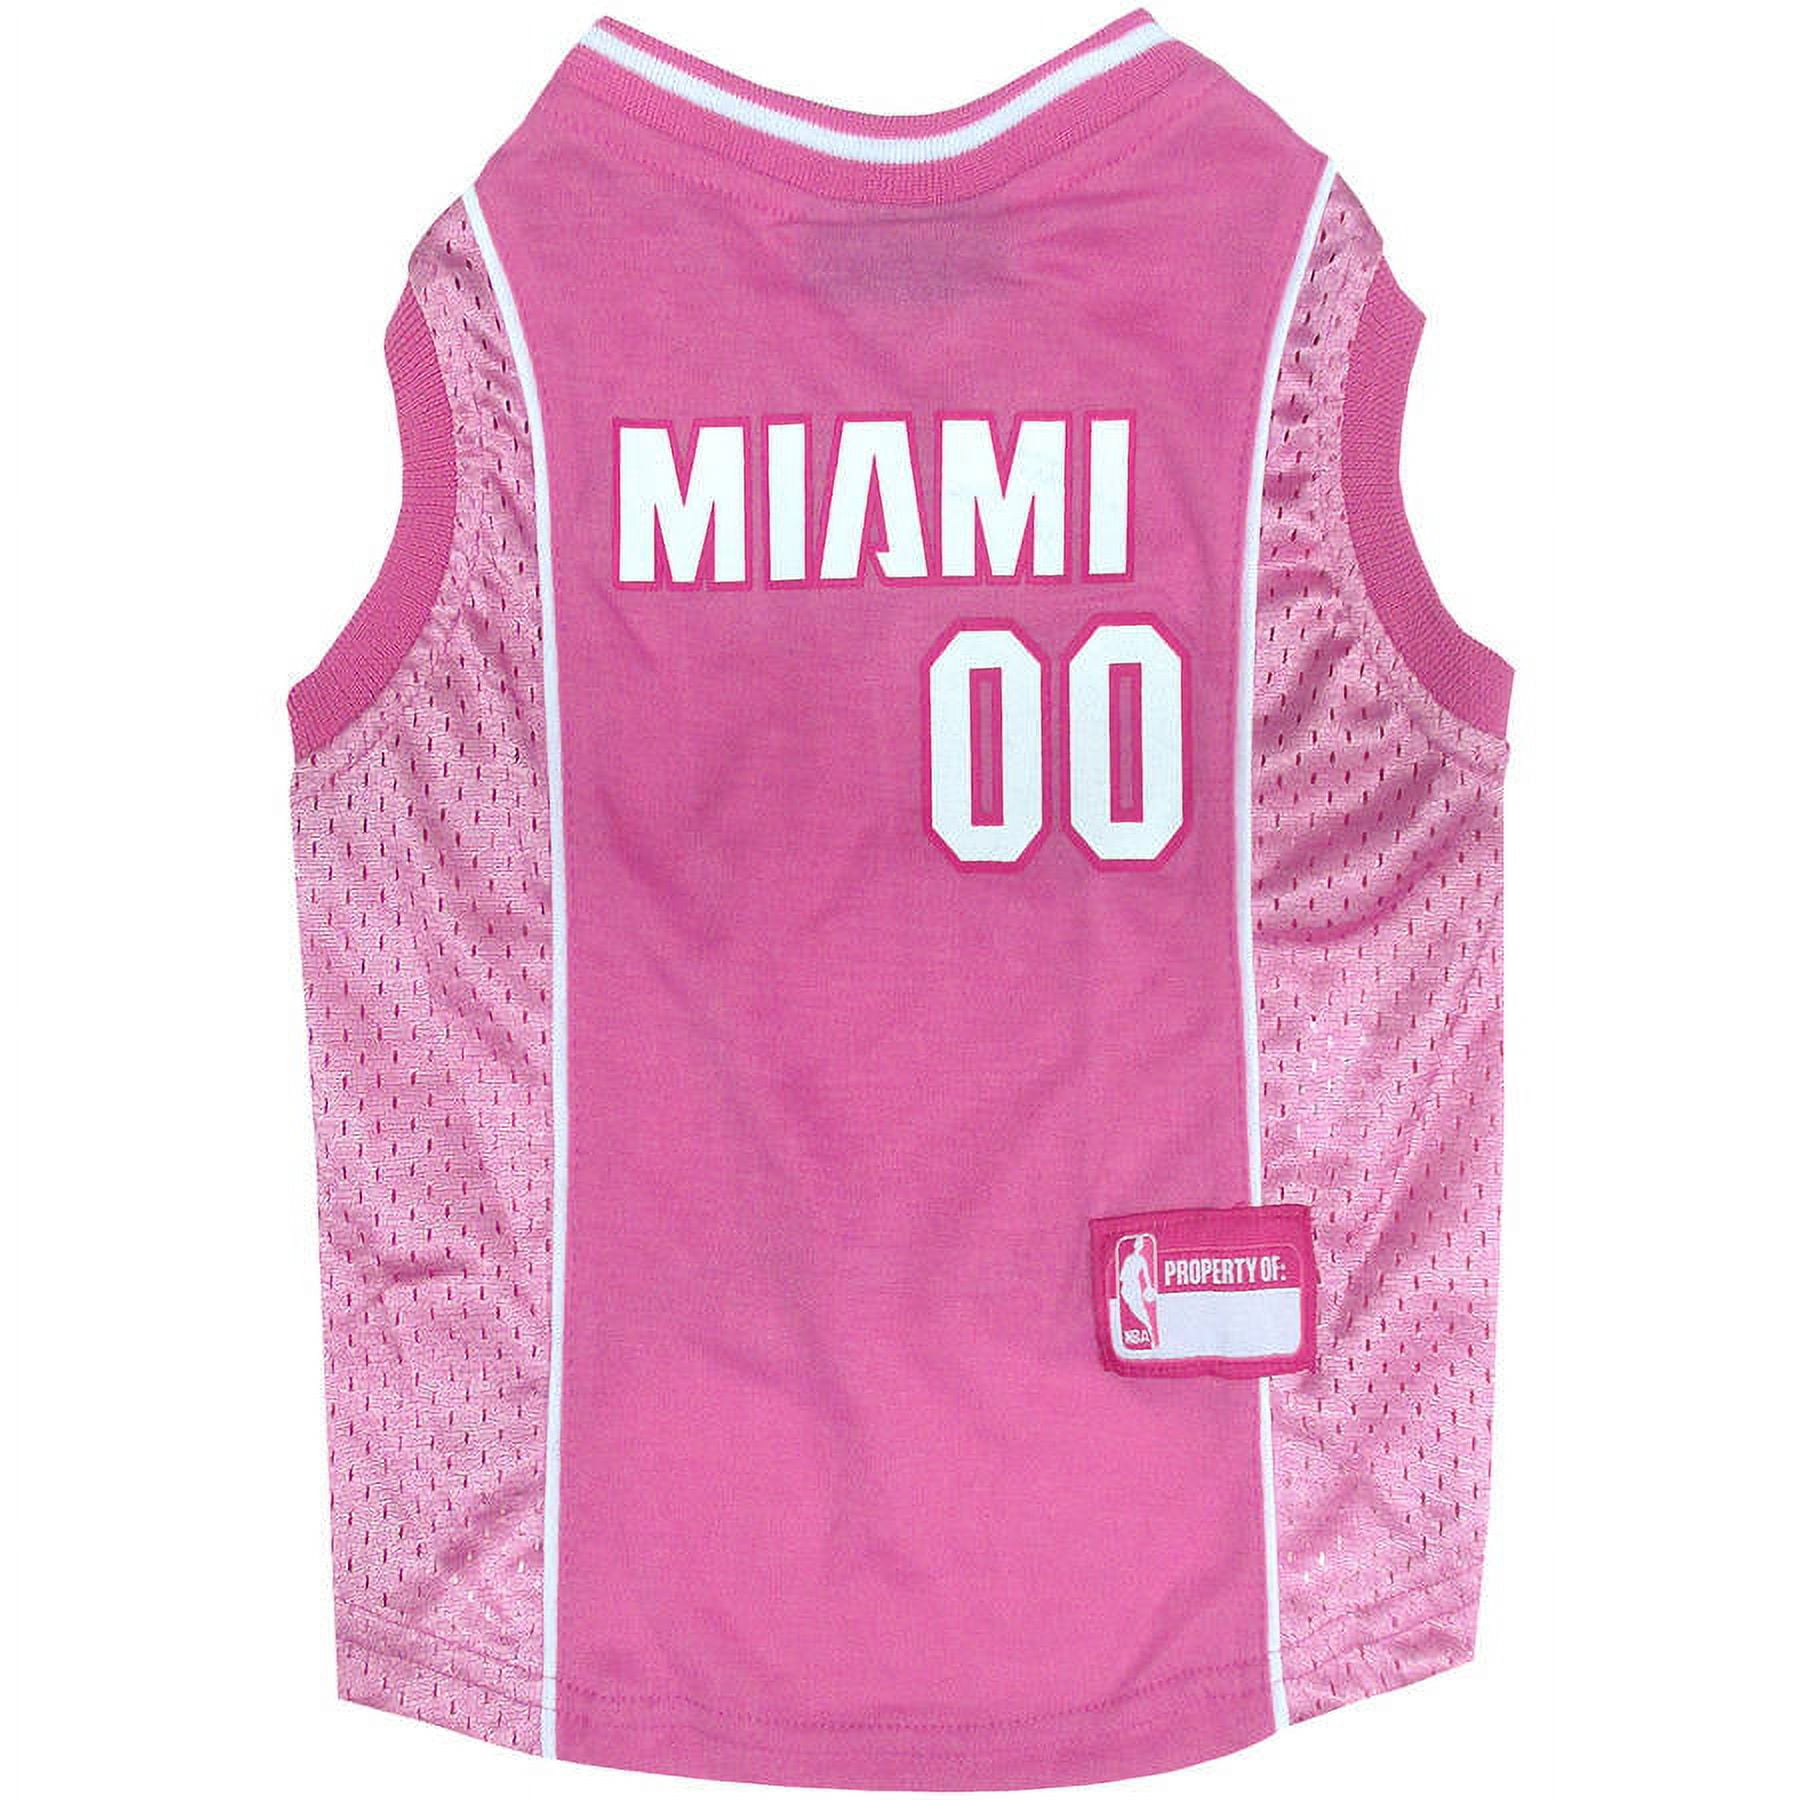 Pets First Miami Heat Pink Pet Jersey - Medium